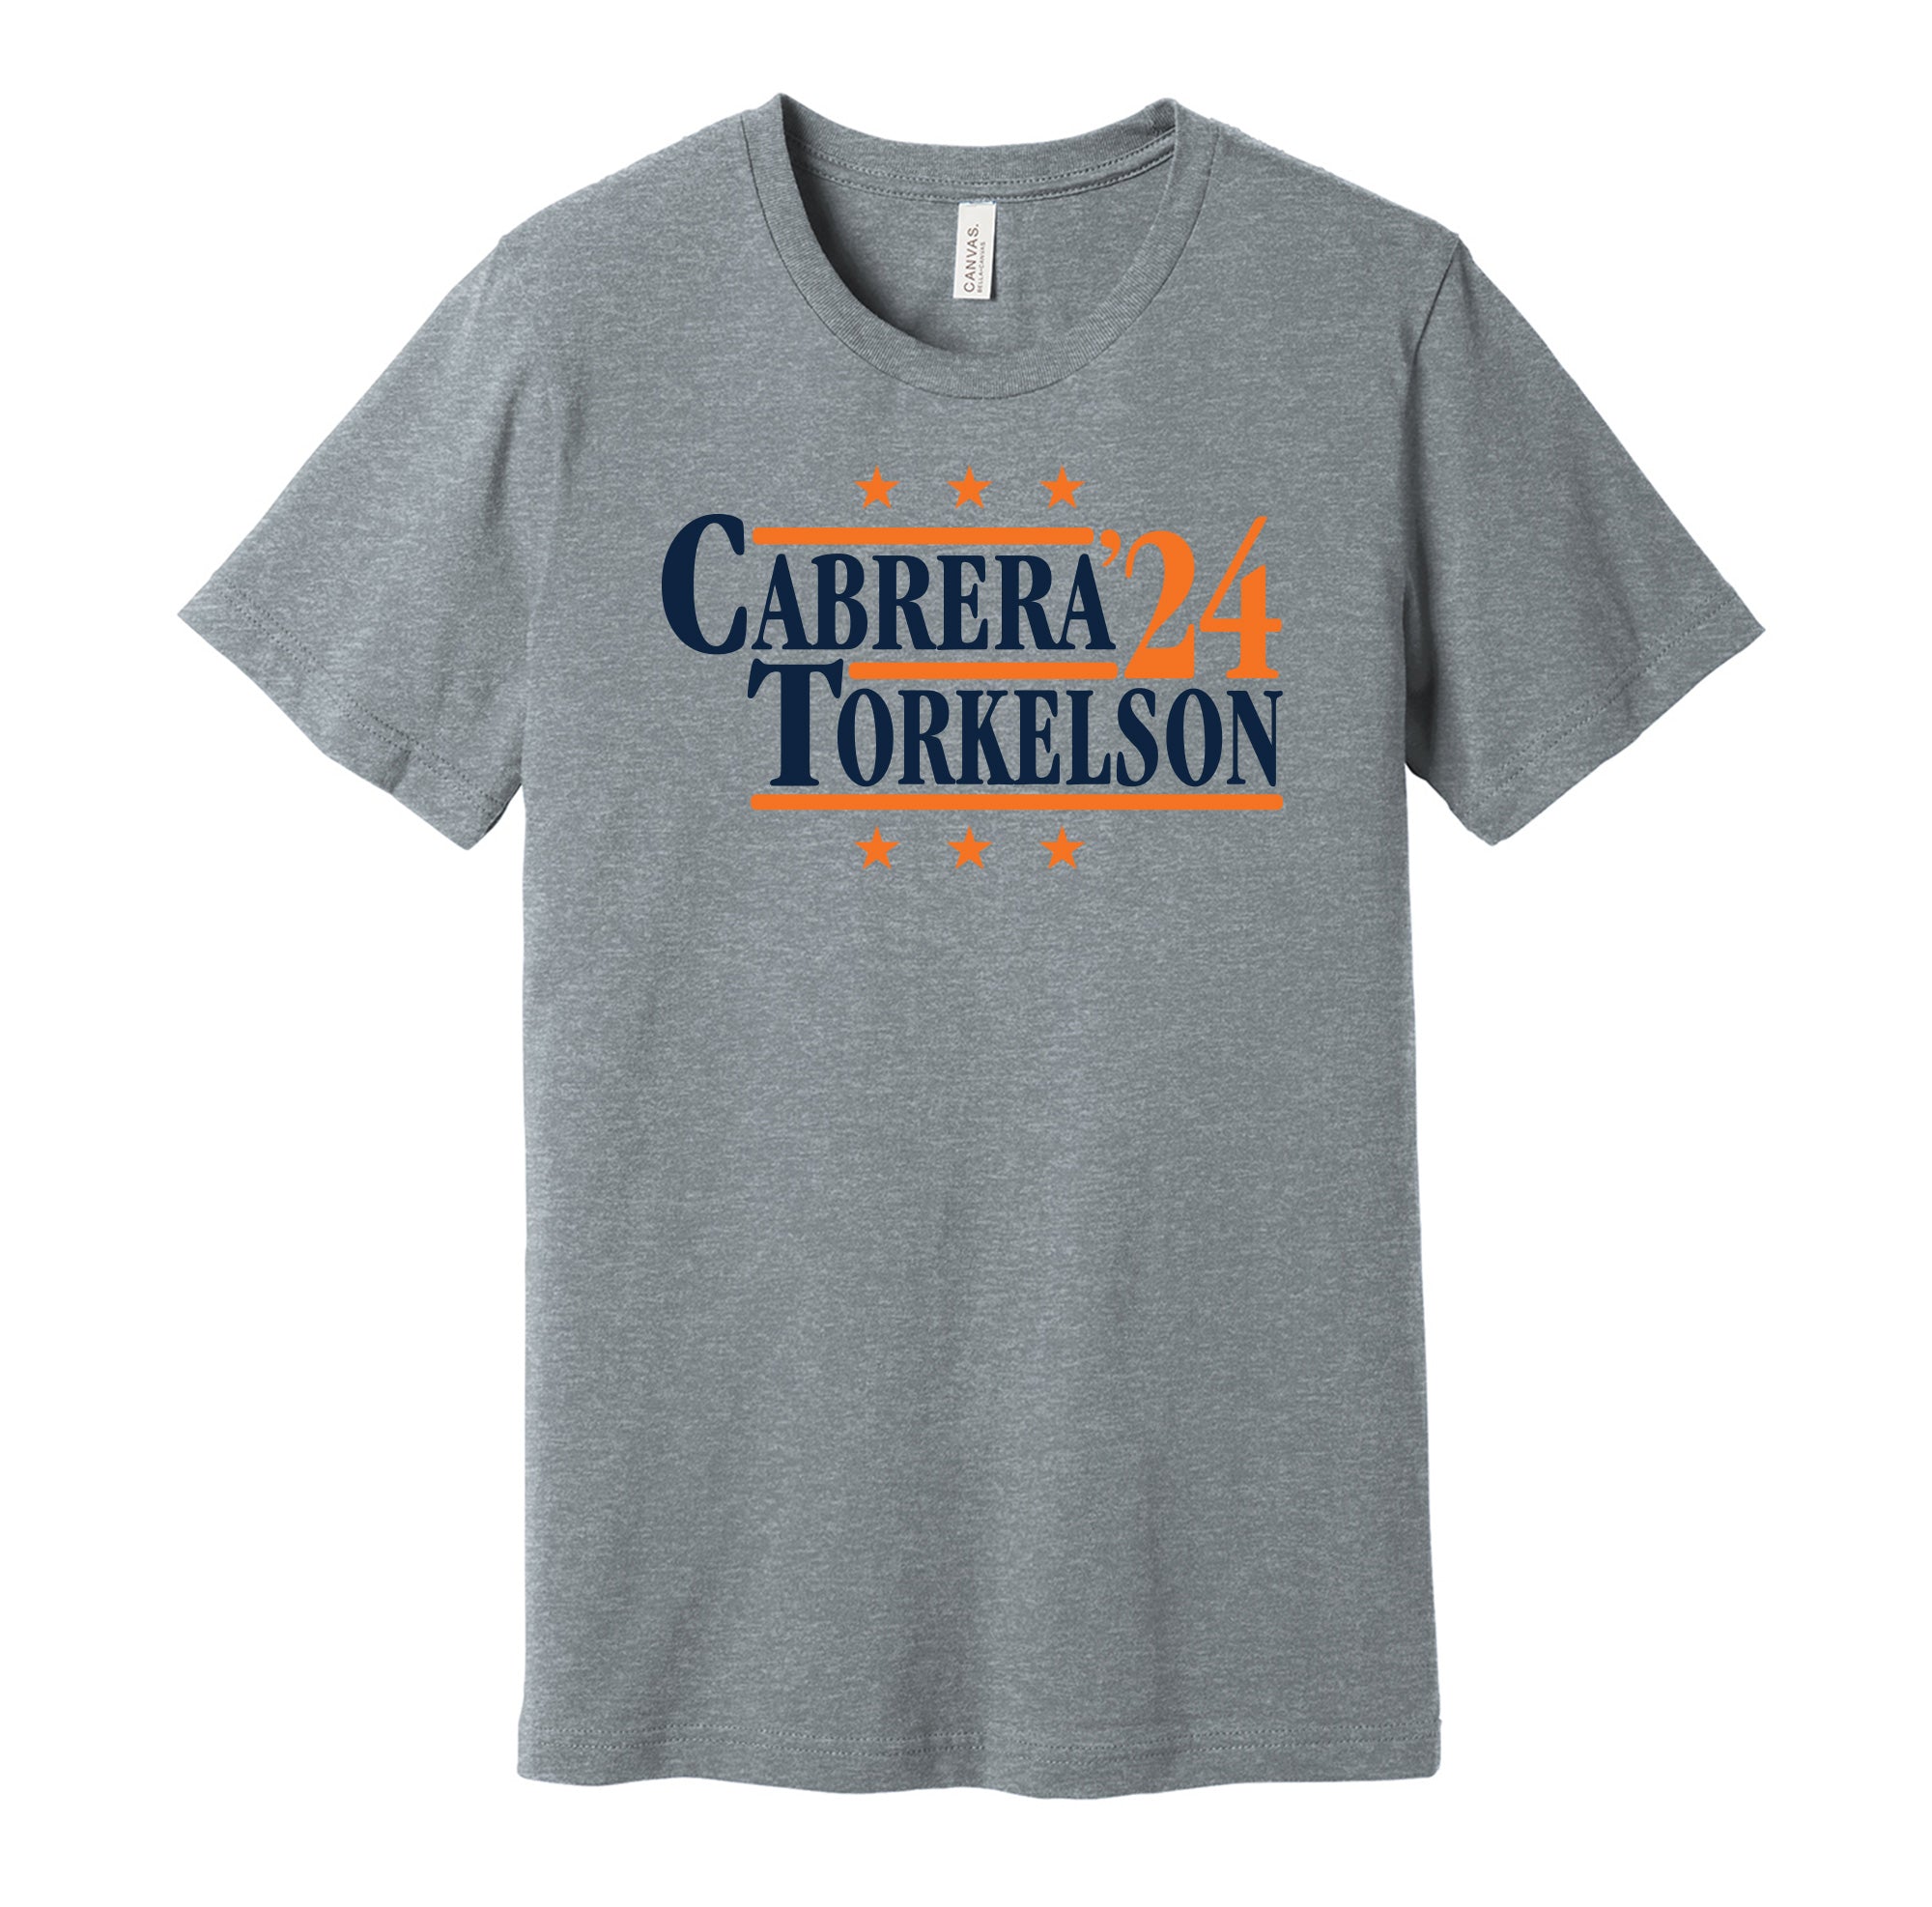 Cabrera & Torkelson '24 - Detroit Baseball Political Campaign Parody T-Shirt - Hyper Than Hype Shirts S / Grey Shirt